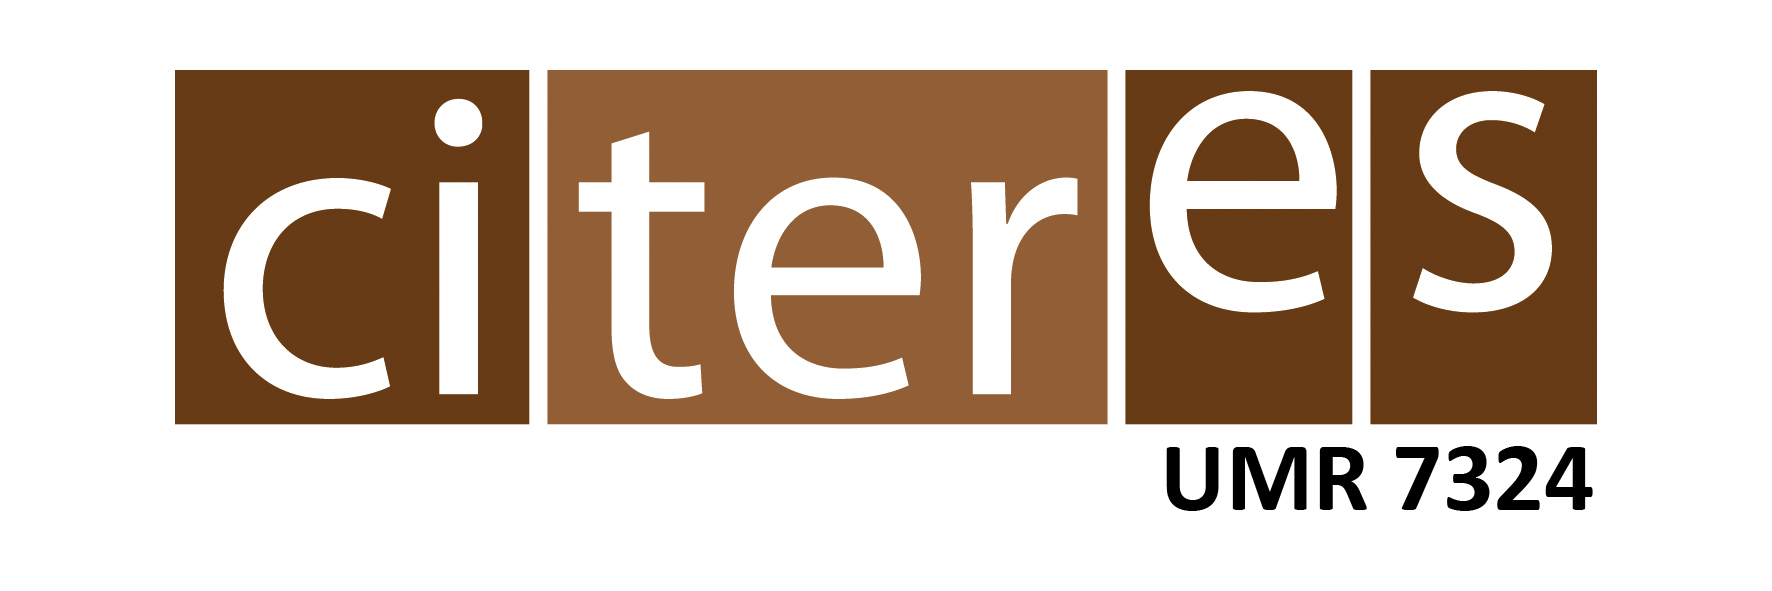 logo_CITERES